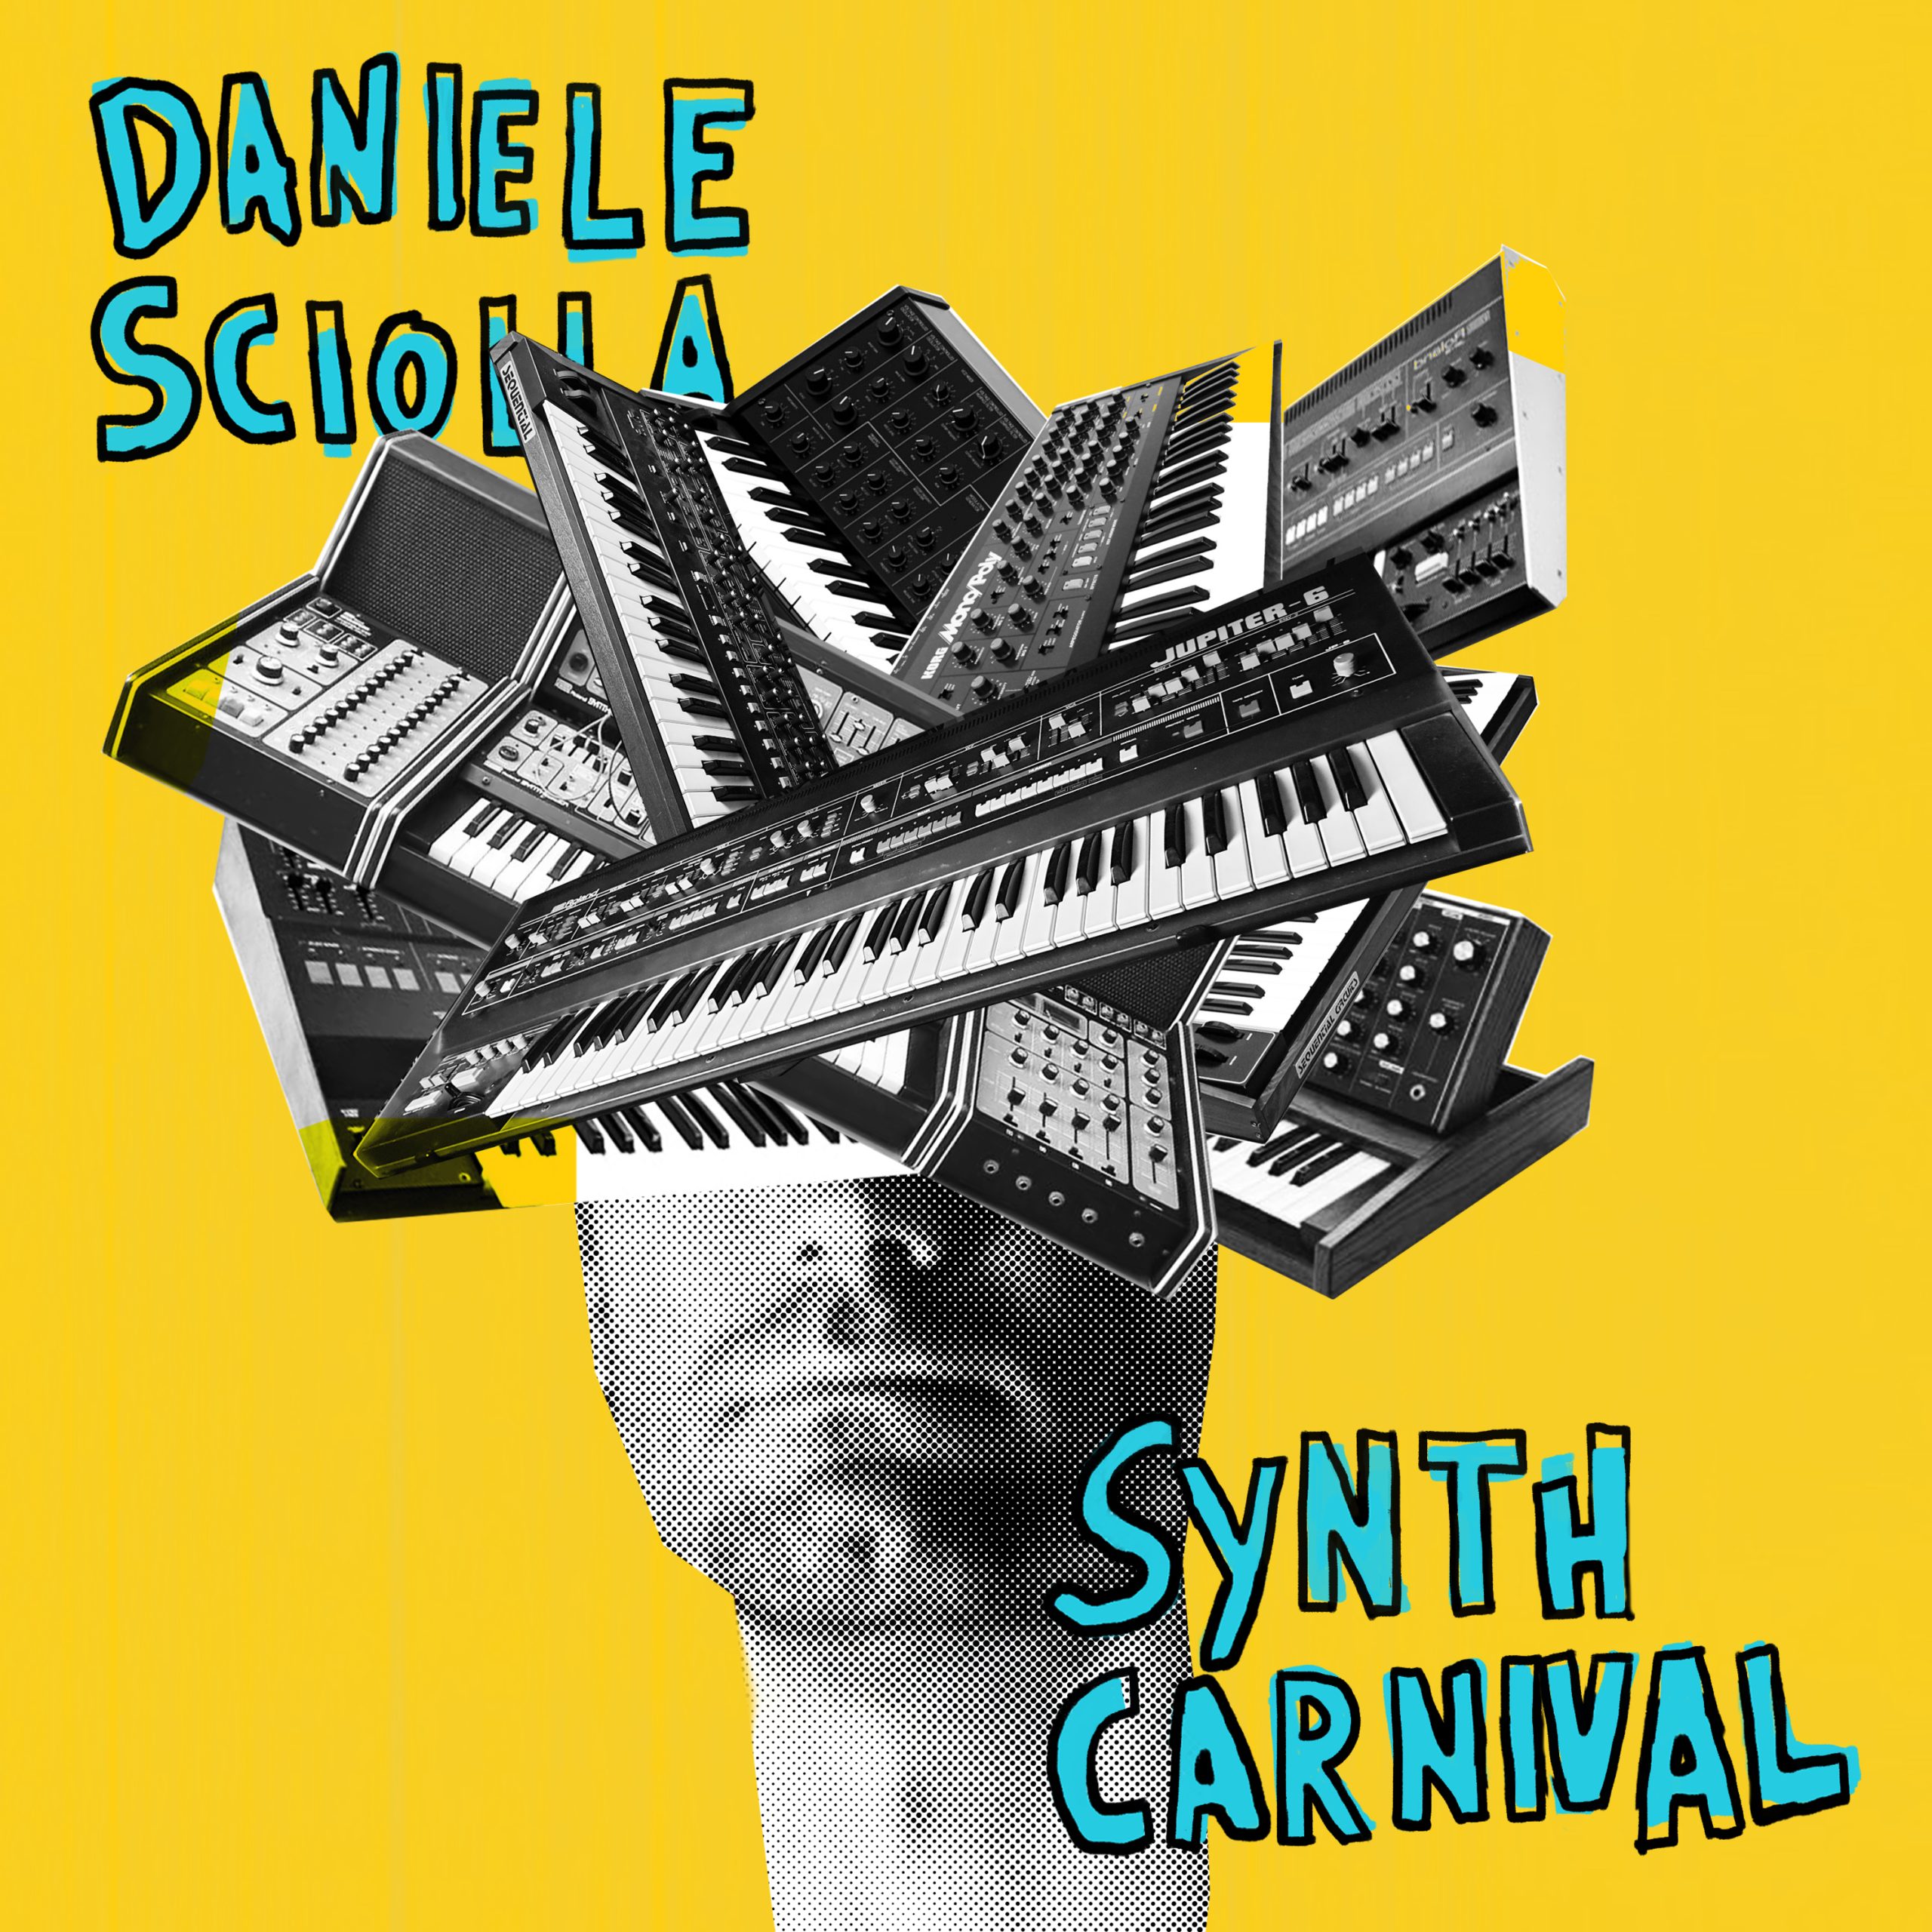 Daniele-Sciolla-Synth-Carnival-Hi-Res